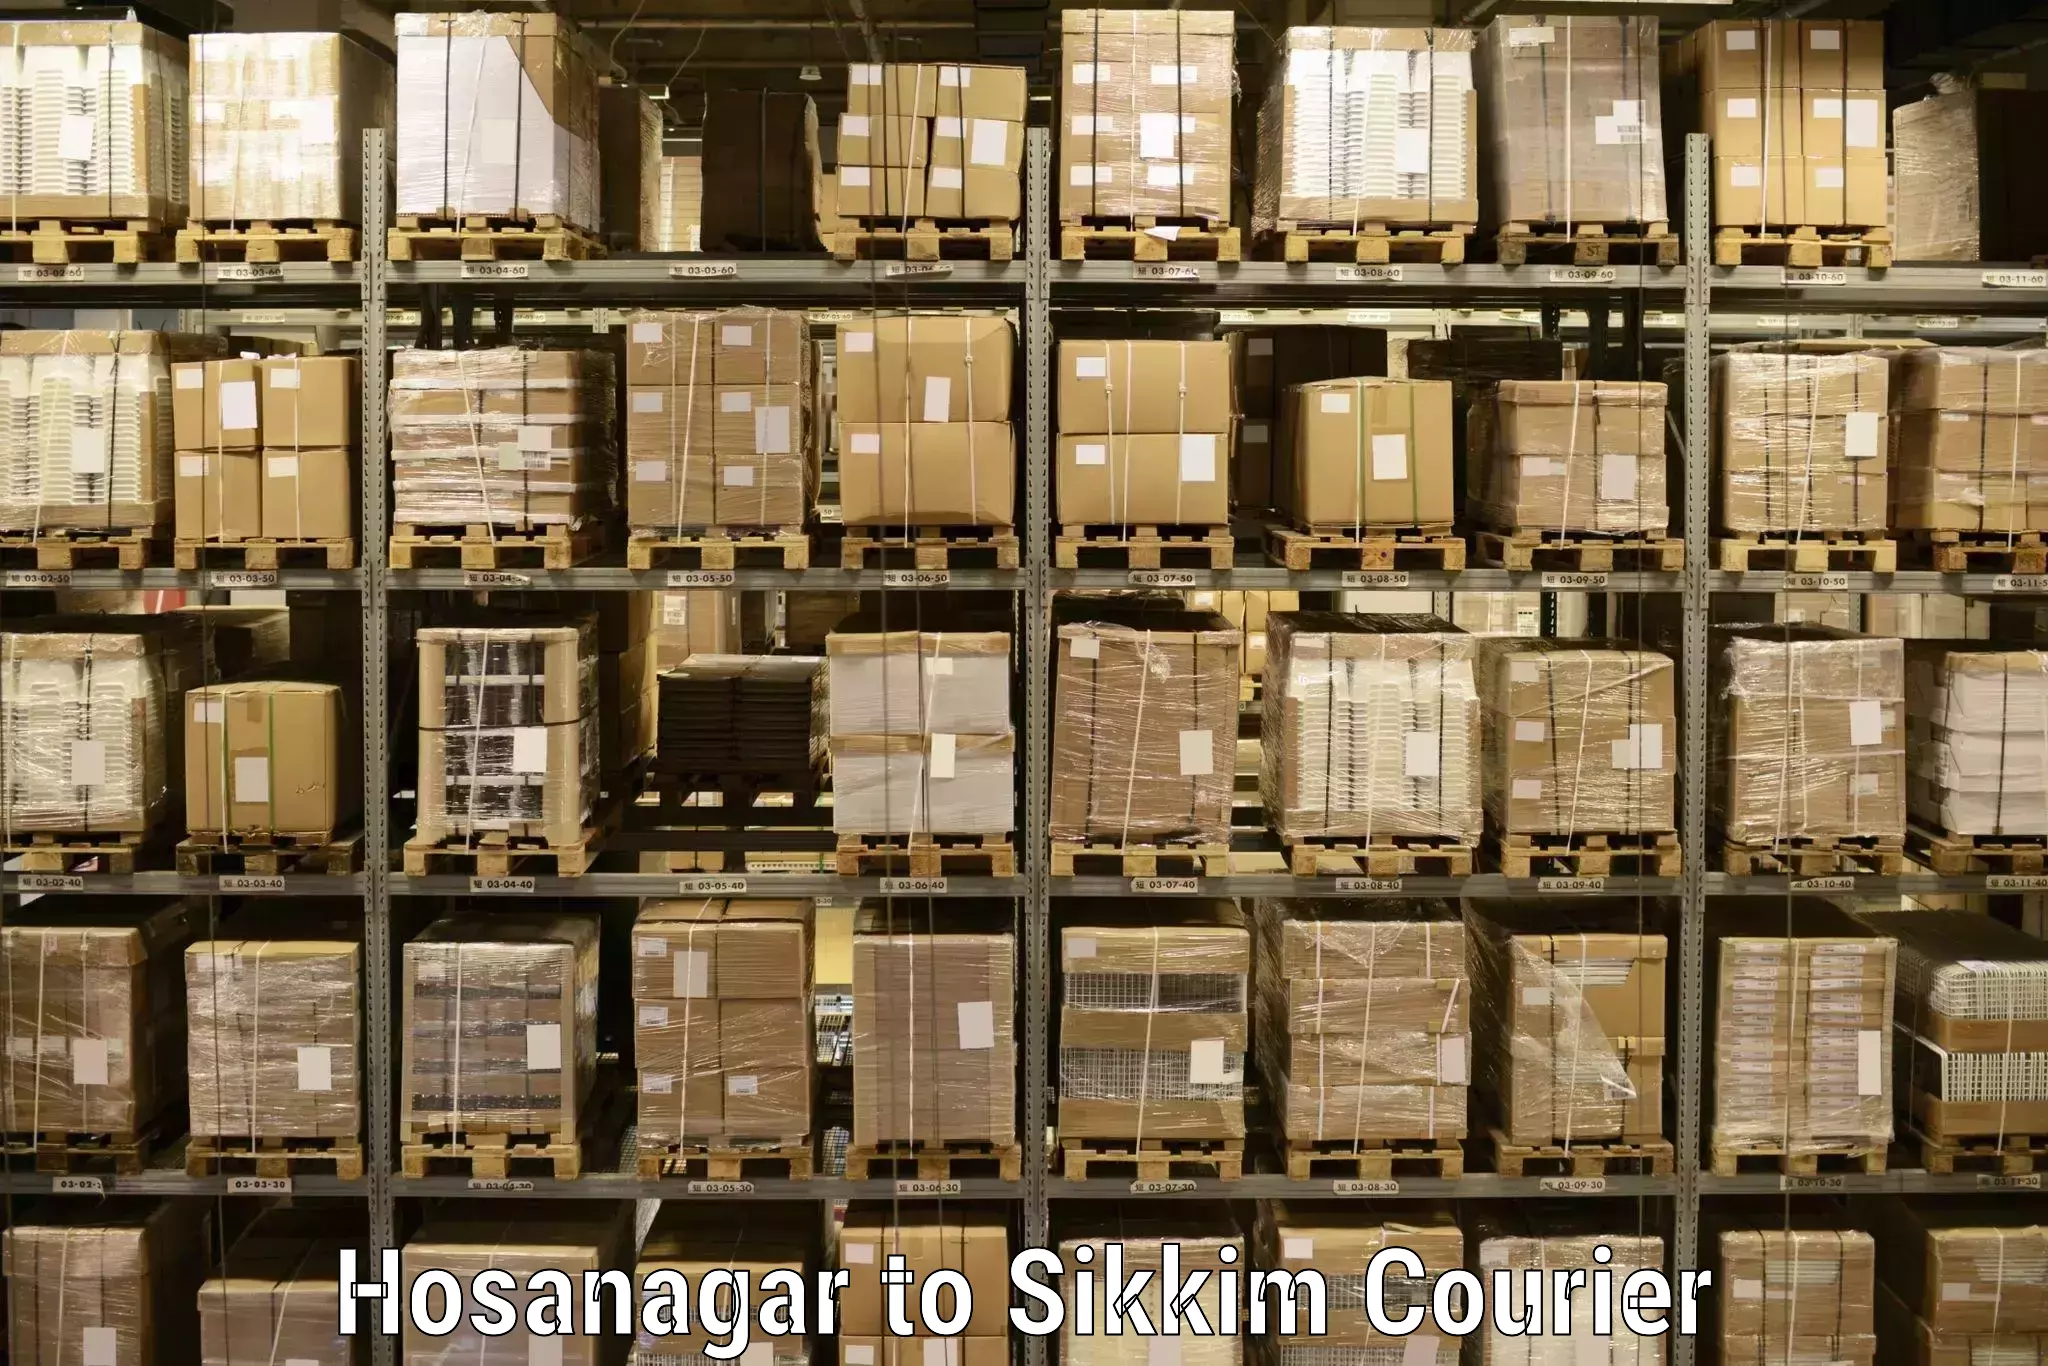 User-friendly delivery service Hosanagar to Geyzing